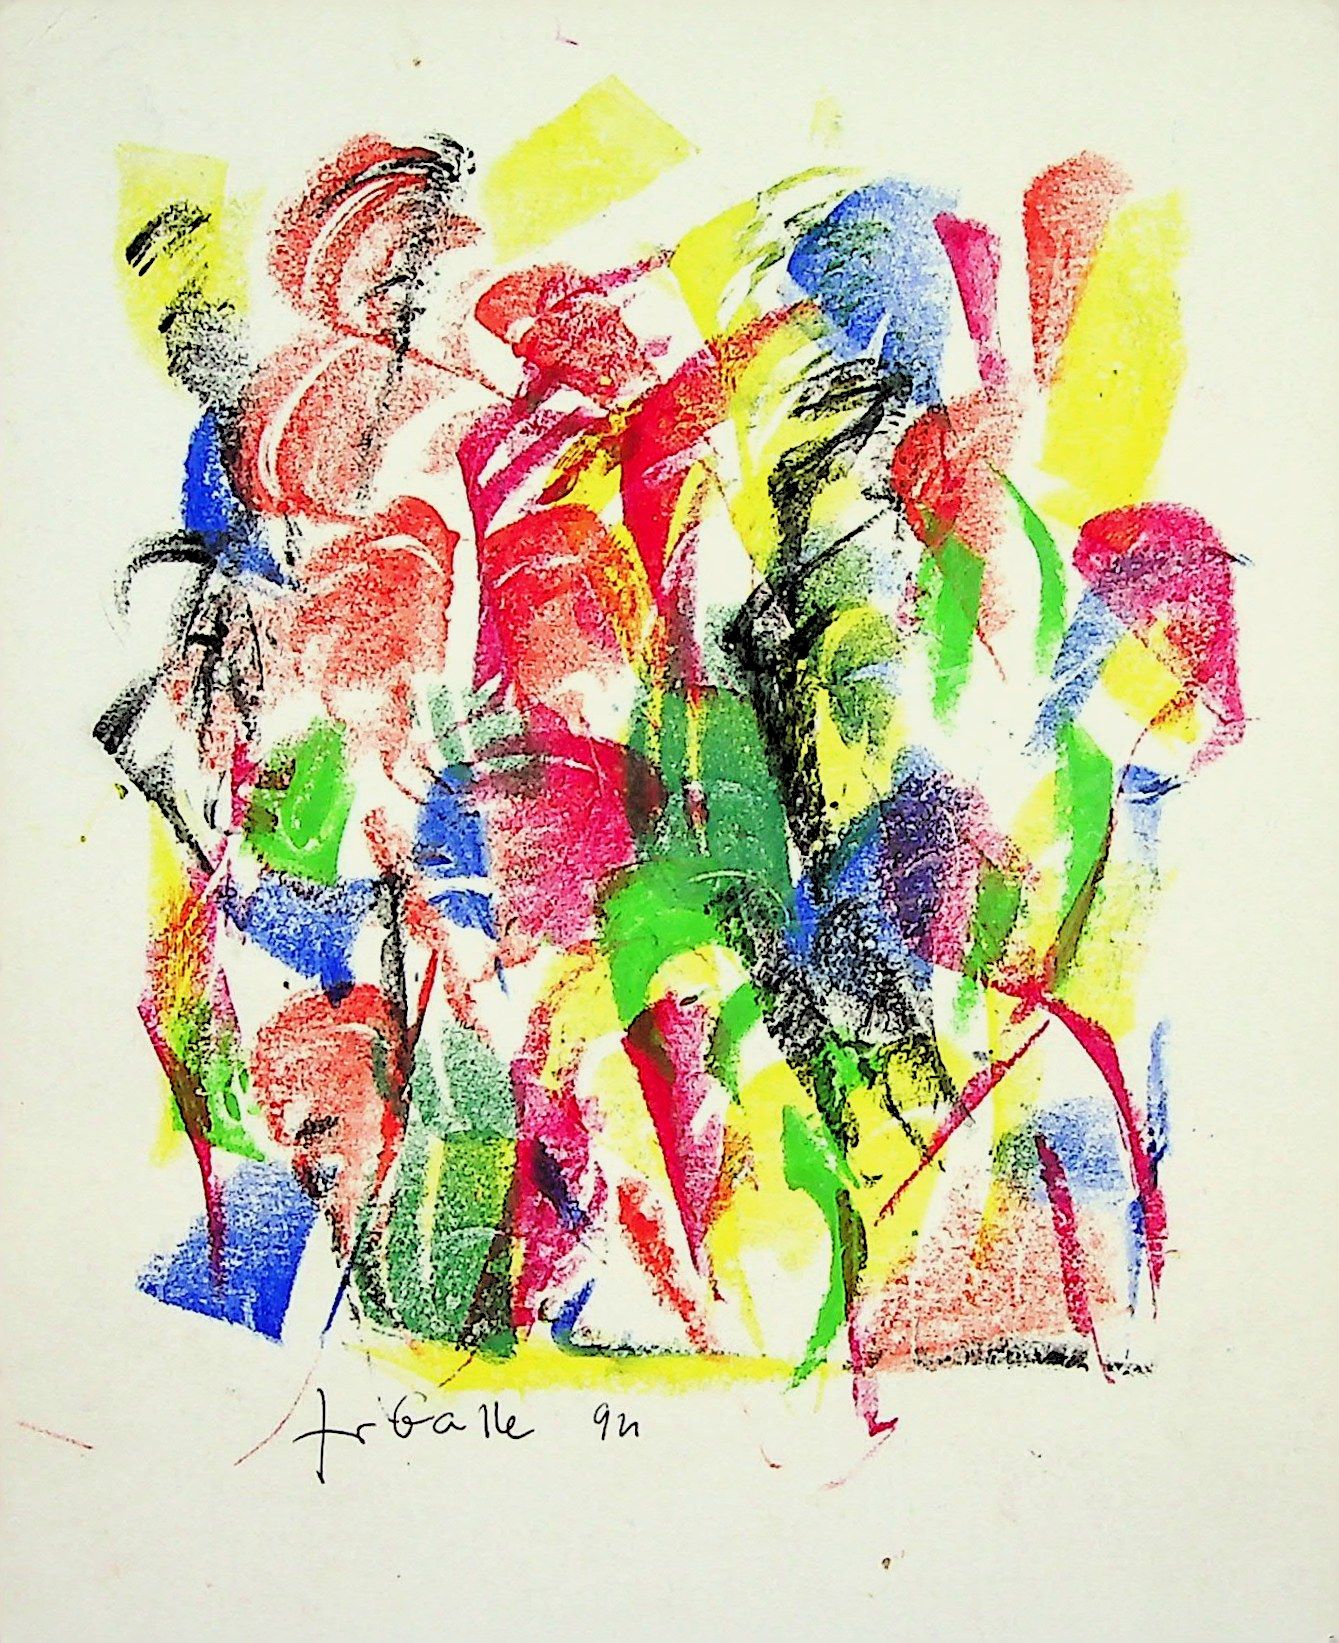 Françoise Galle 弗朗索瓦丝-加勒 (1940)

运动与色彩, 1994

混合媒体，粉彩和丙烯酸

底部有艺术家的签名和日期

牛皮纸上 16&hellip;